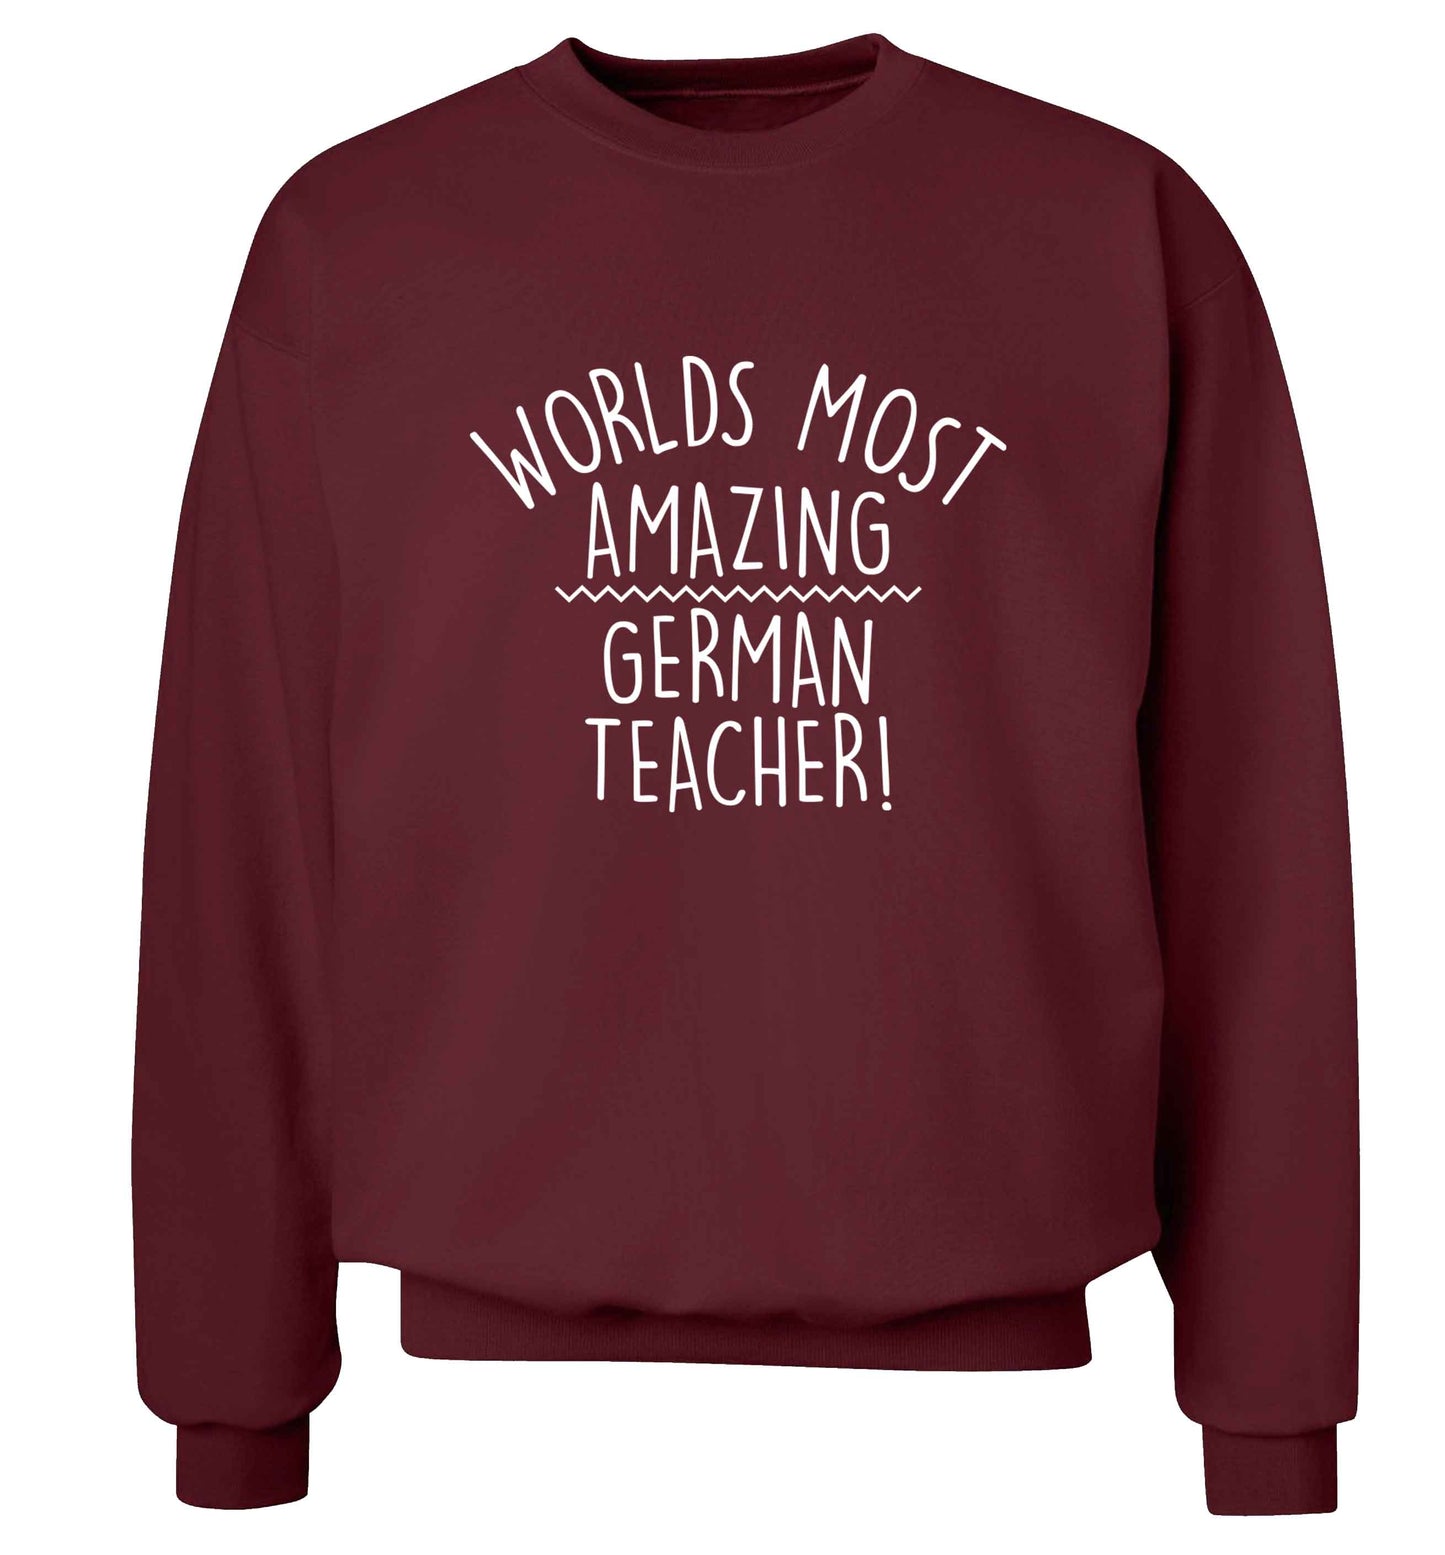 Worlds most amazing German teacher adult's unisex maroon sweater 2XL